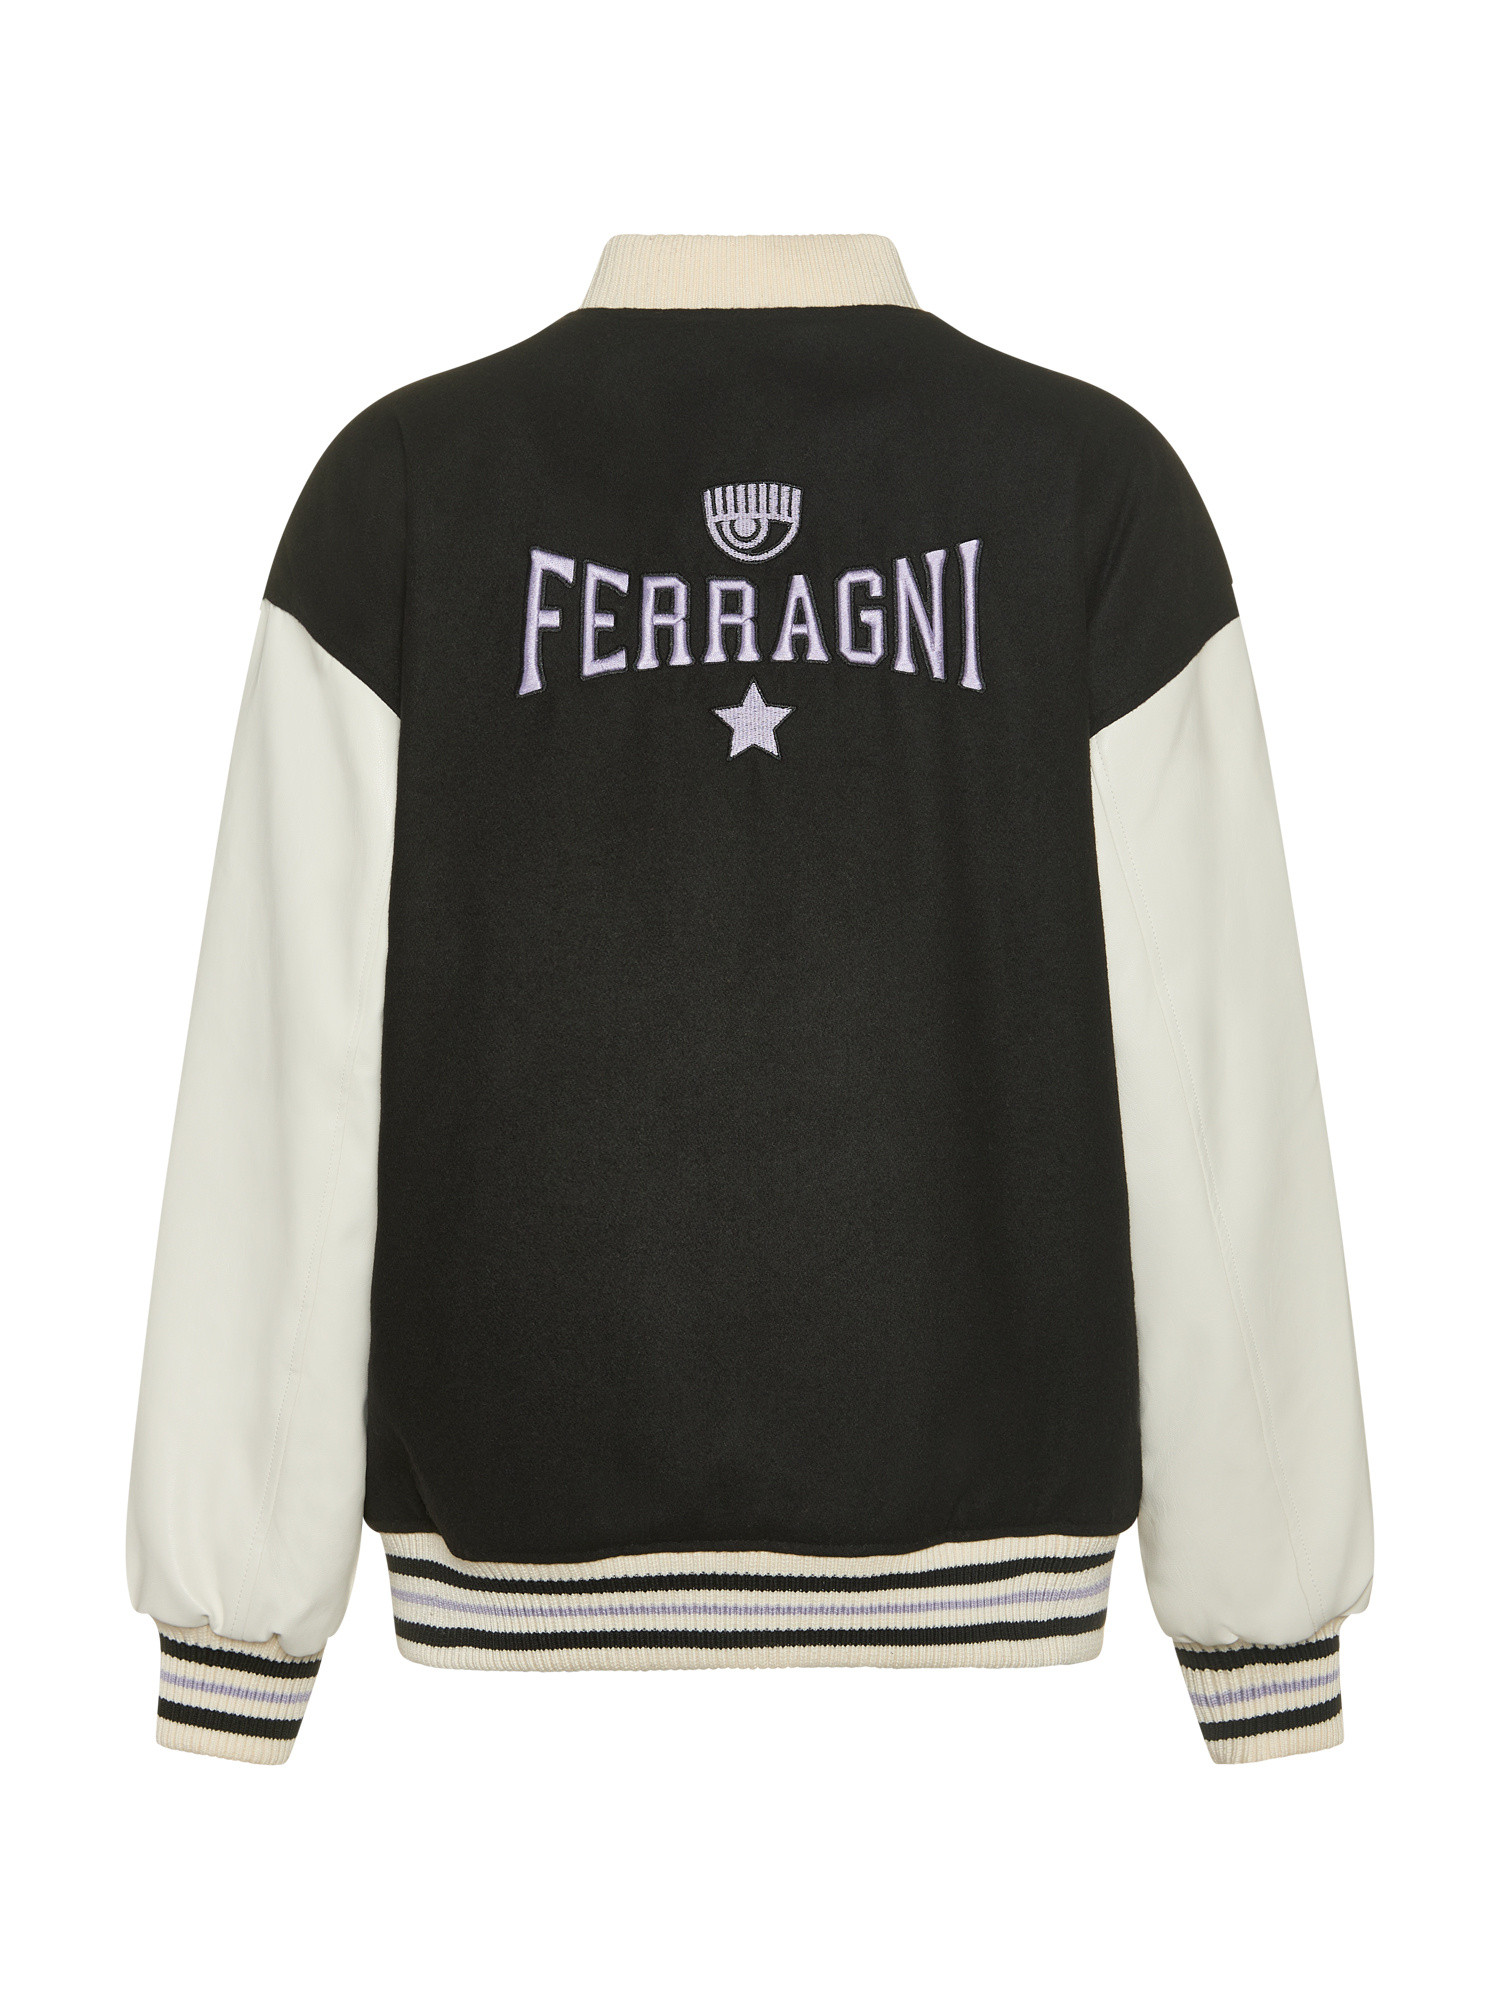 Chiara Ferragni - Ferragni stretch bomber jacket, Black, large image number 1